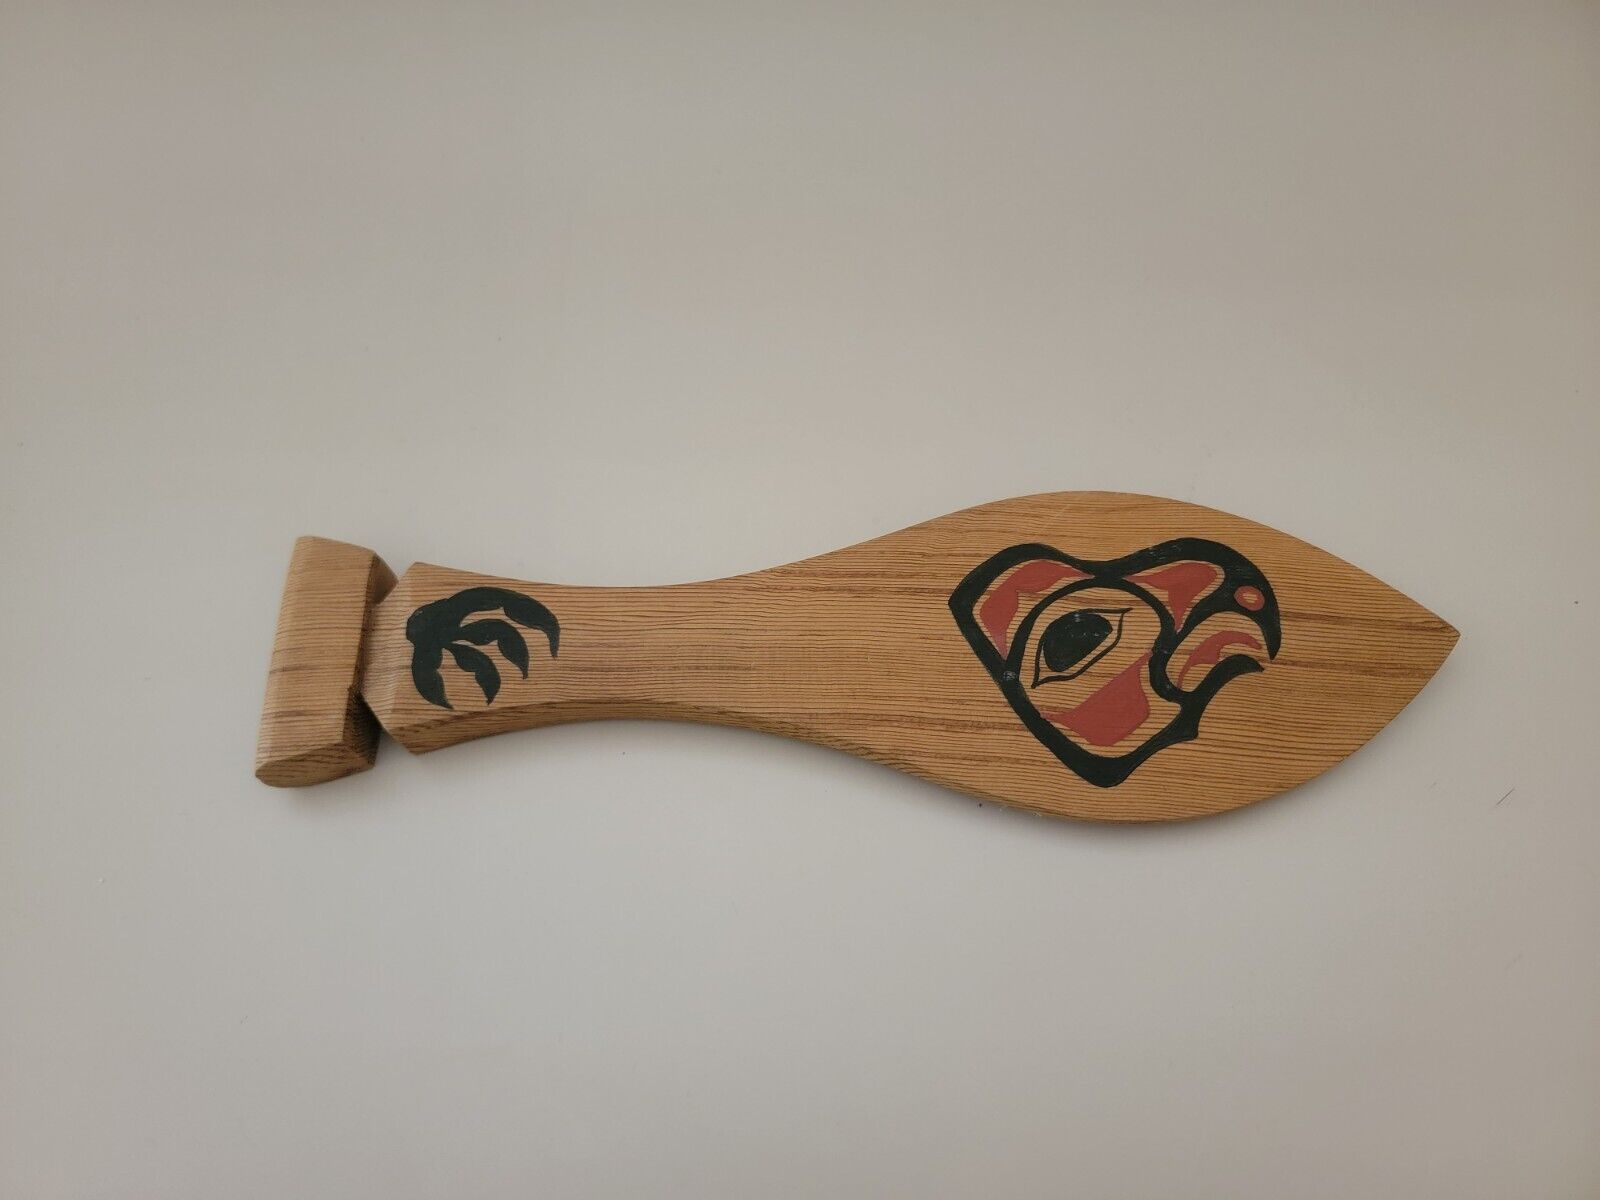 Alaskan Native American Carved Cedar Dance Paddle Signed Woody Anderson 2009